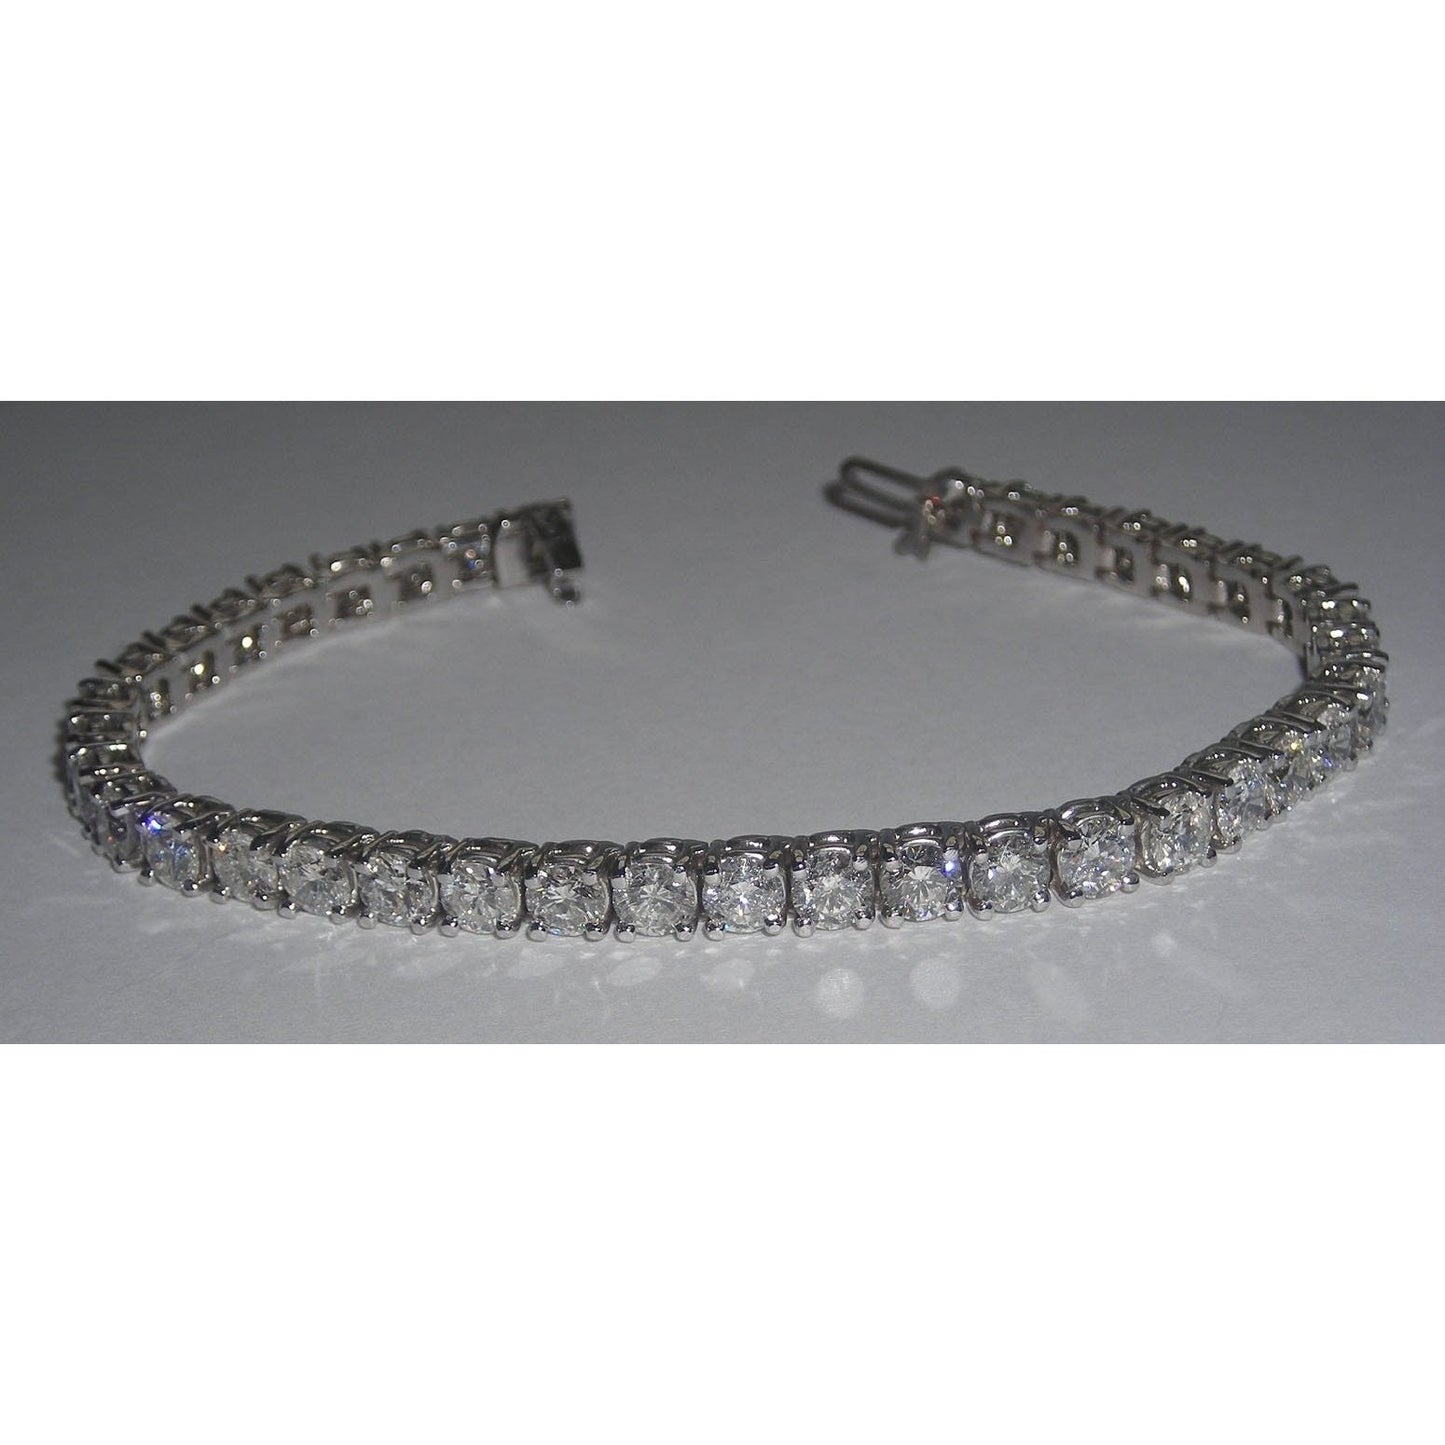 12.80 Carat Diamond Tennis Bracelet White Gold 14K Jewelry